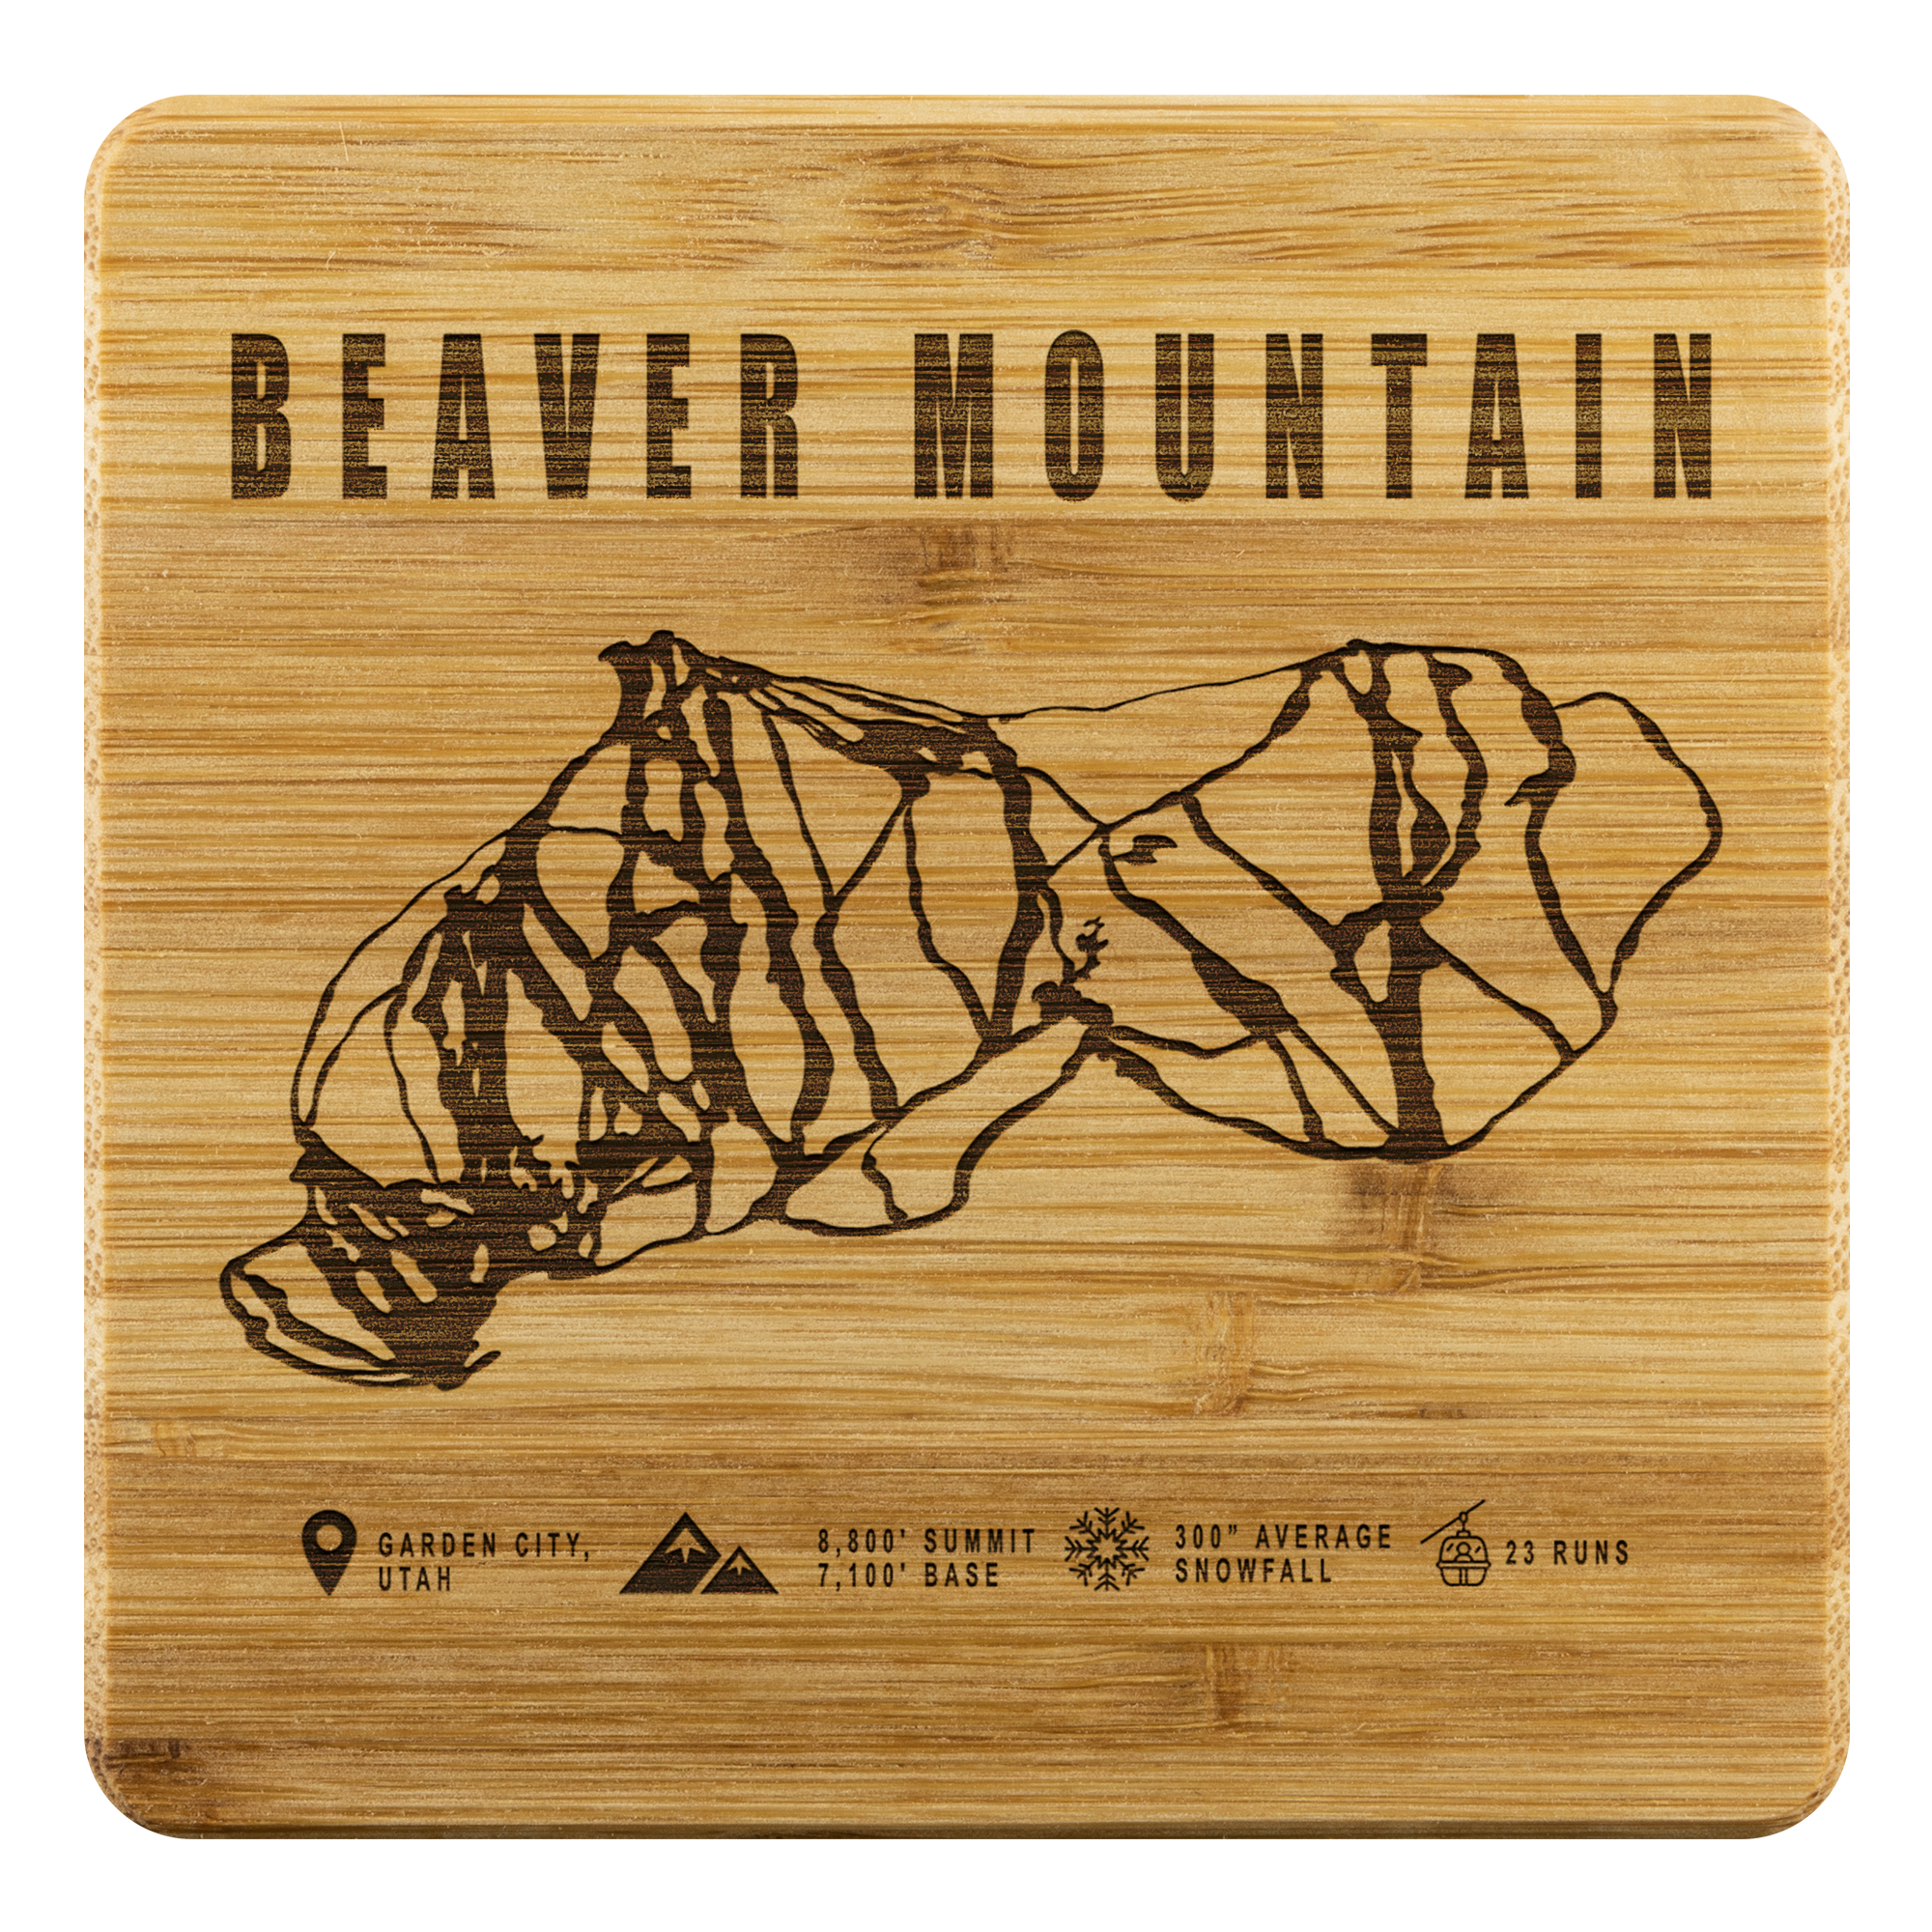 Beaver Mountain,Utah Ski Trail Map Bamboo Coaster - Powderaddicts